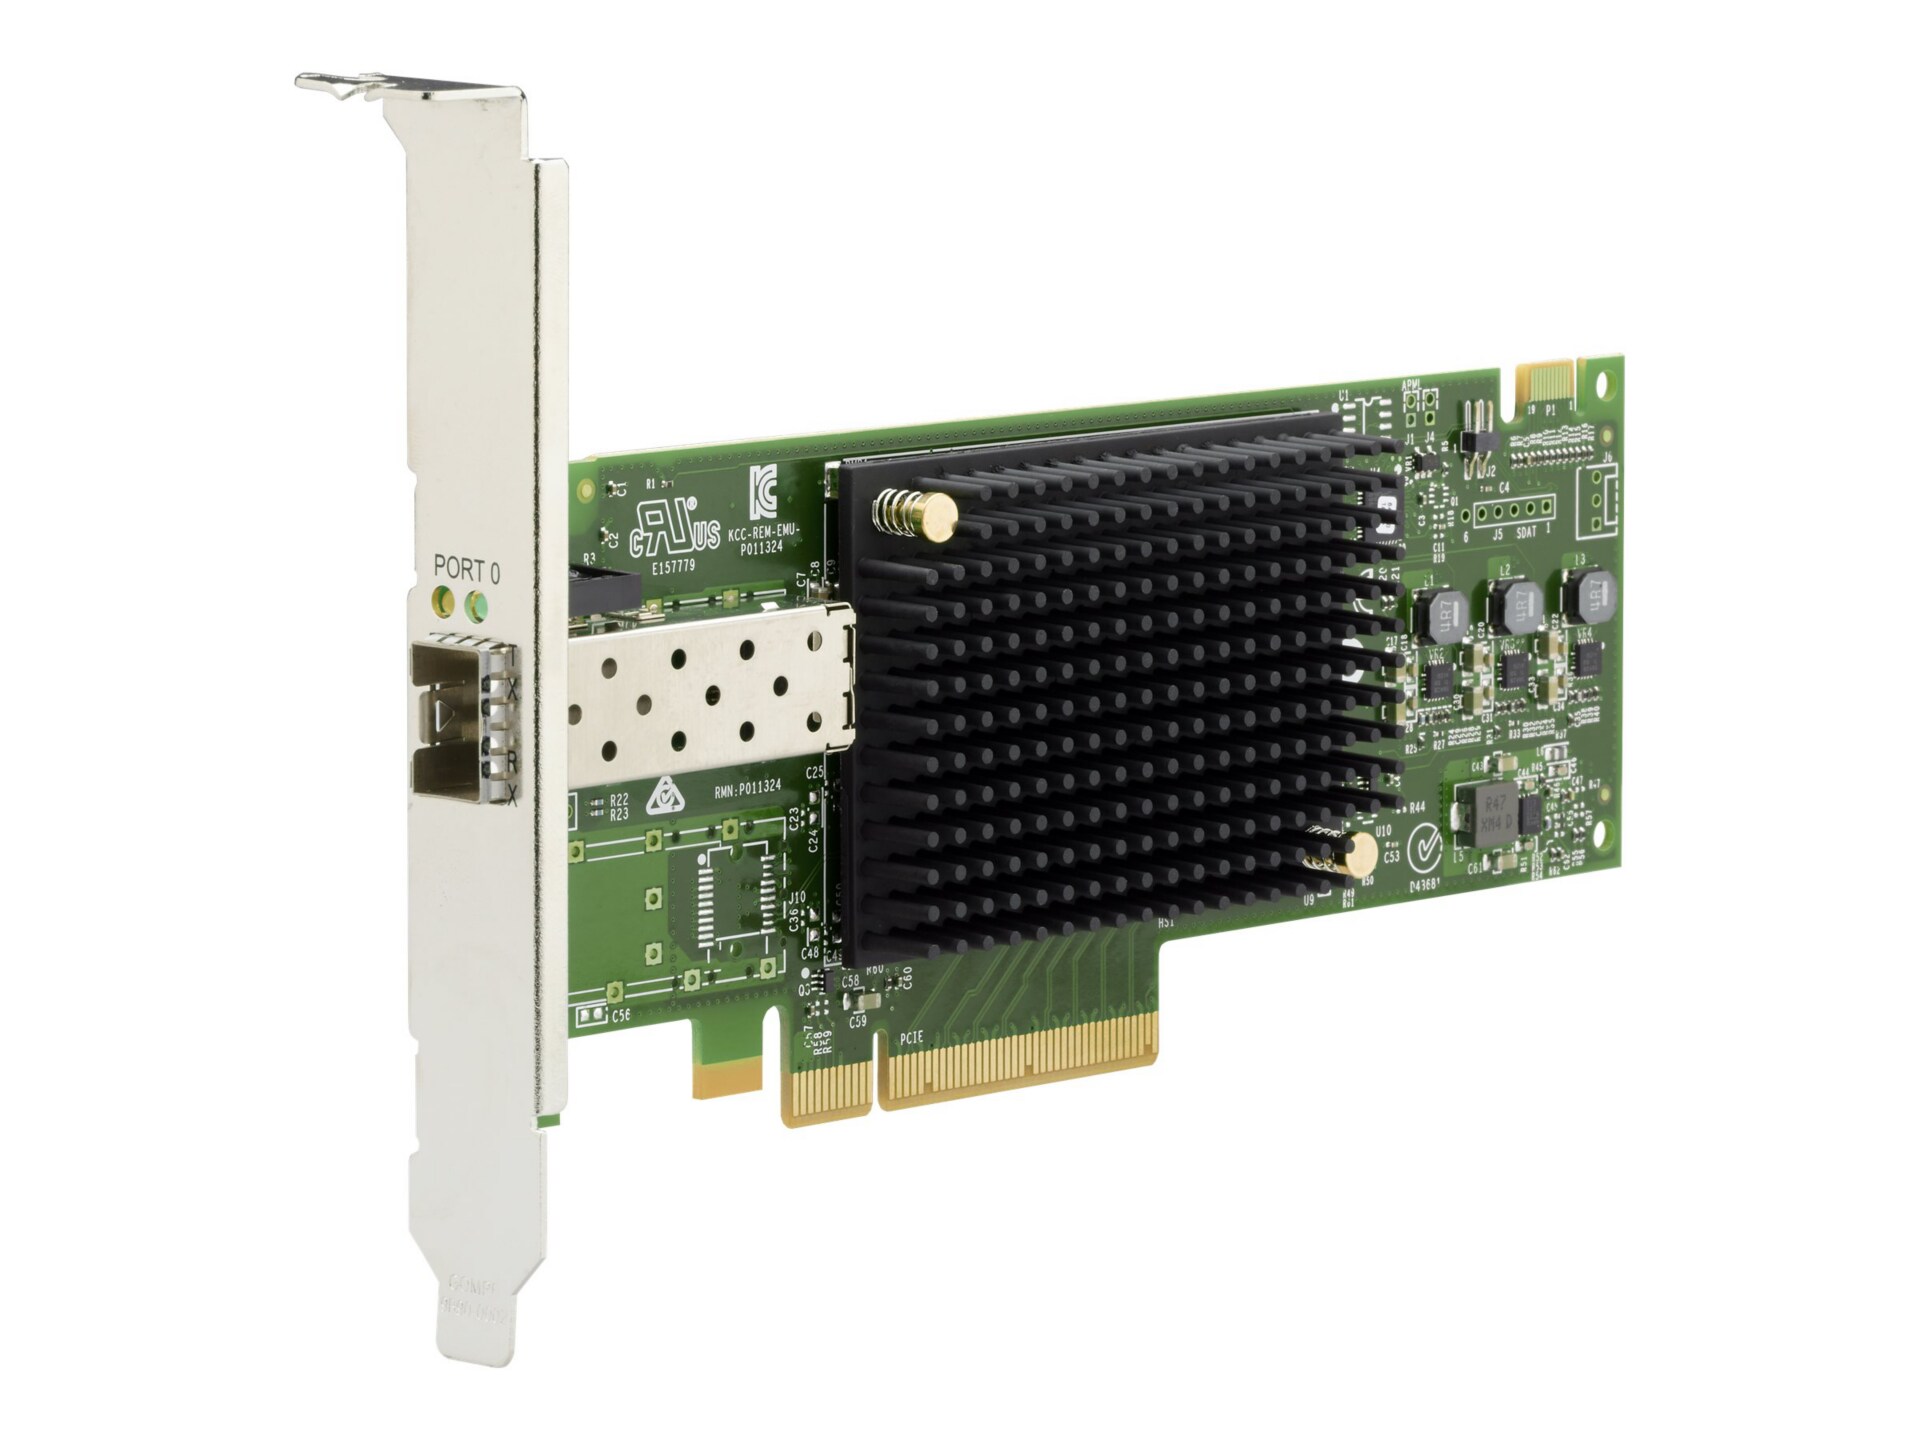 Emulex LPe32000-M2 Gen 6 (32Gb), single-port HBA - host bus adapter - PCIe 3.0 x8 - 32Gb Fibre Channel Gen 6 x 1